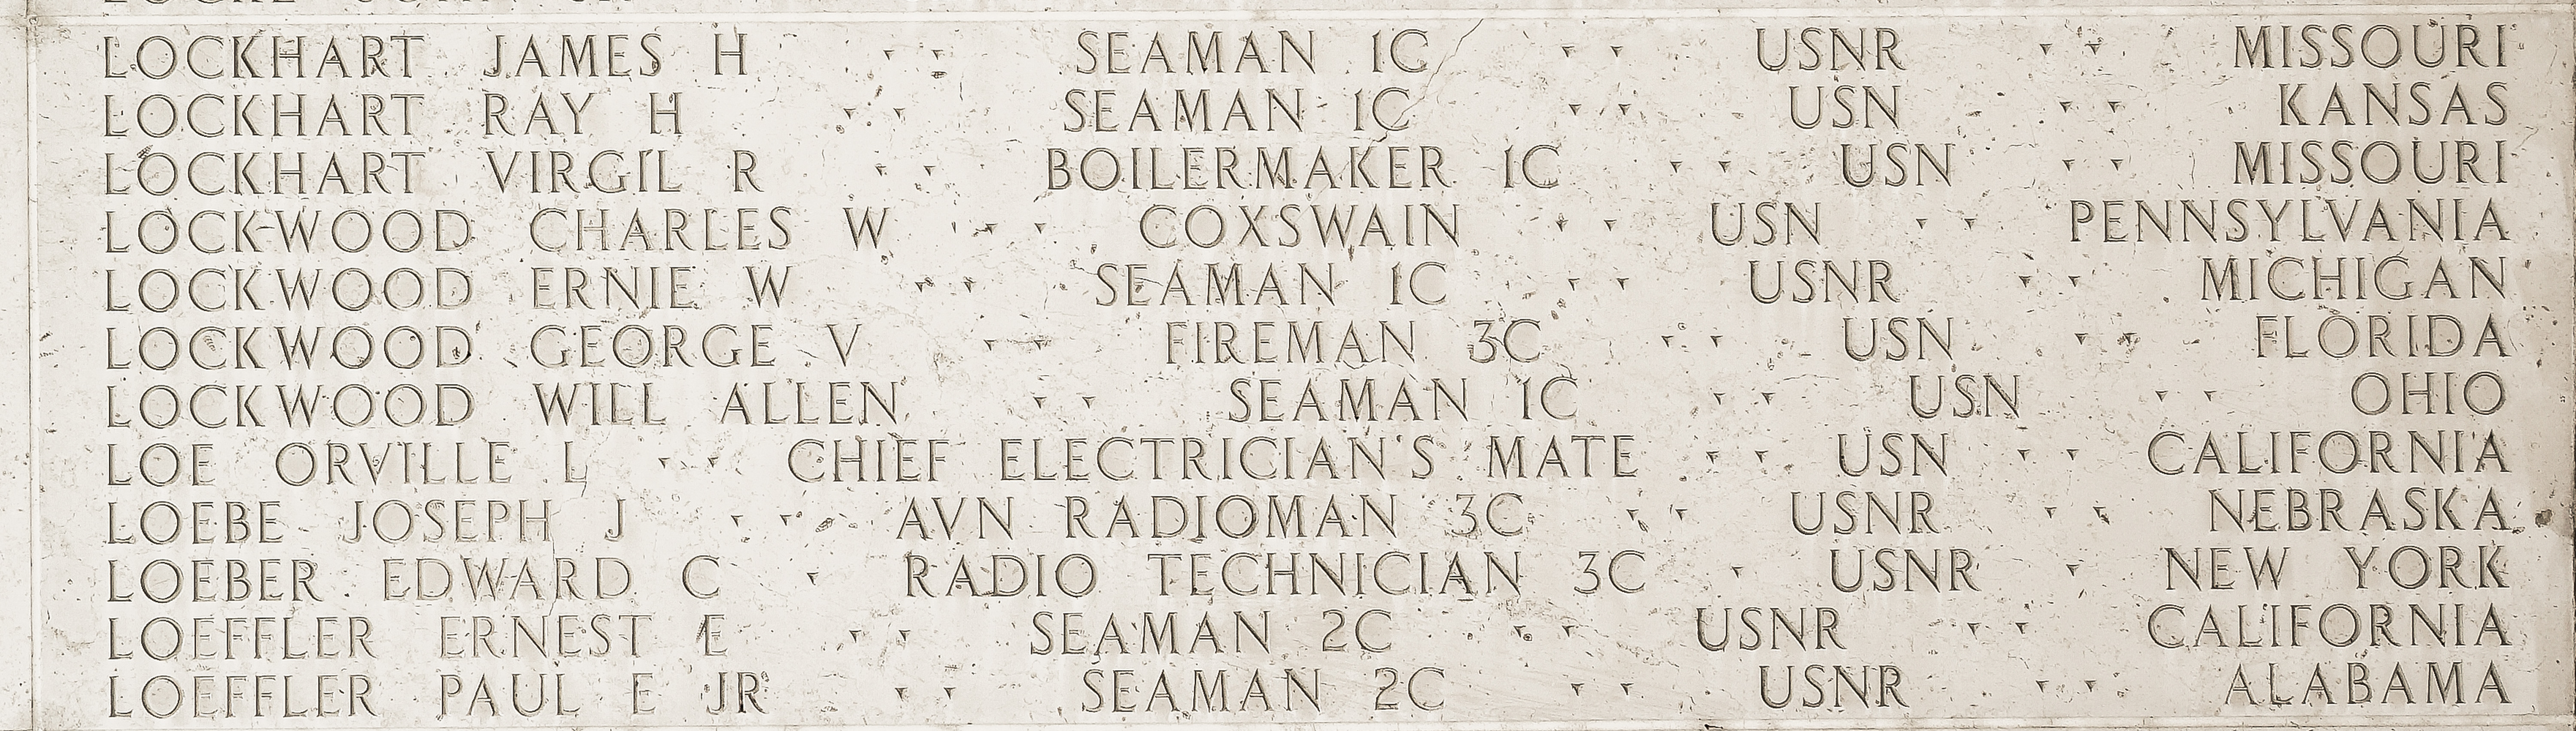 Edward C. Loeber, Radio Technician Third Class